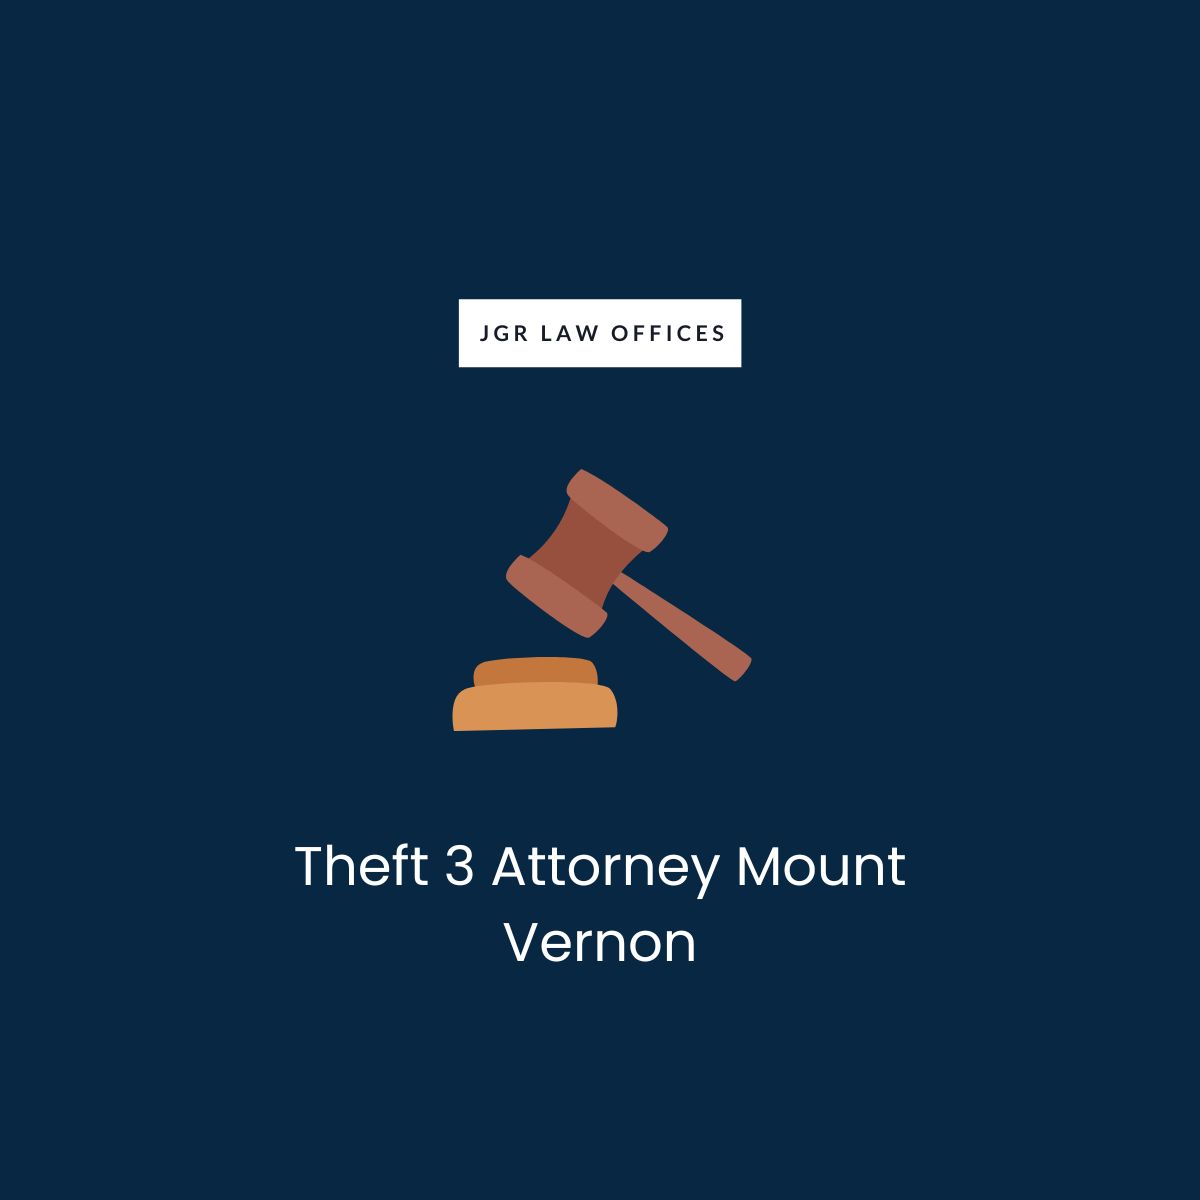 Theft 3 Attorney Mount Vernon